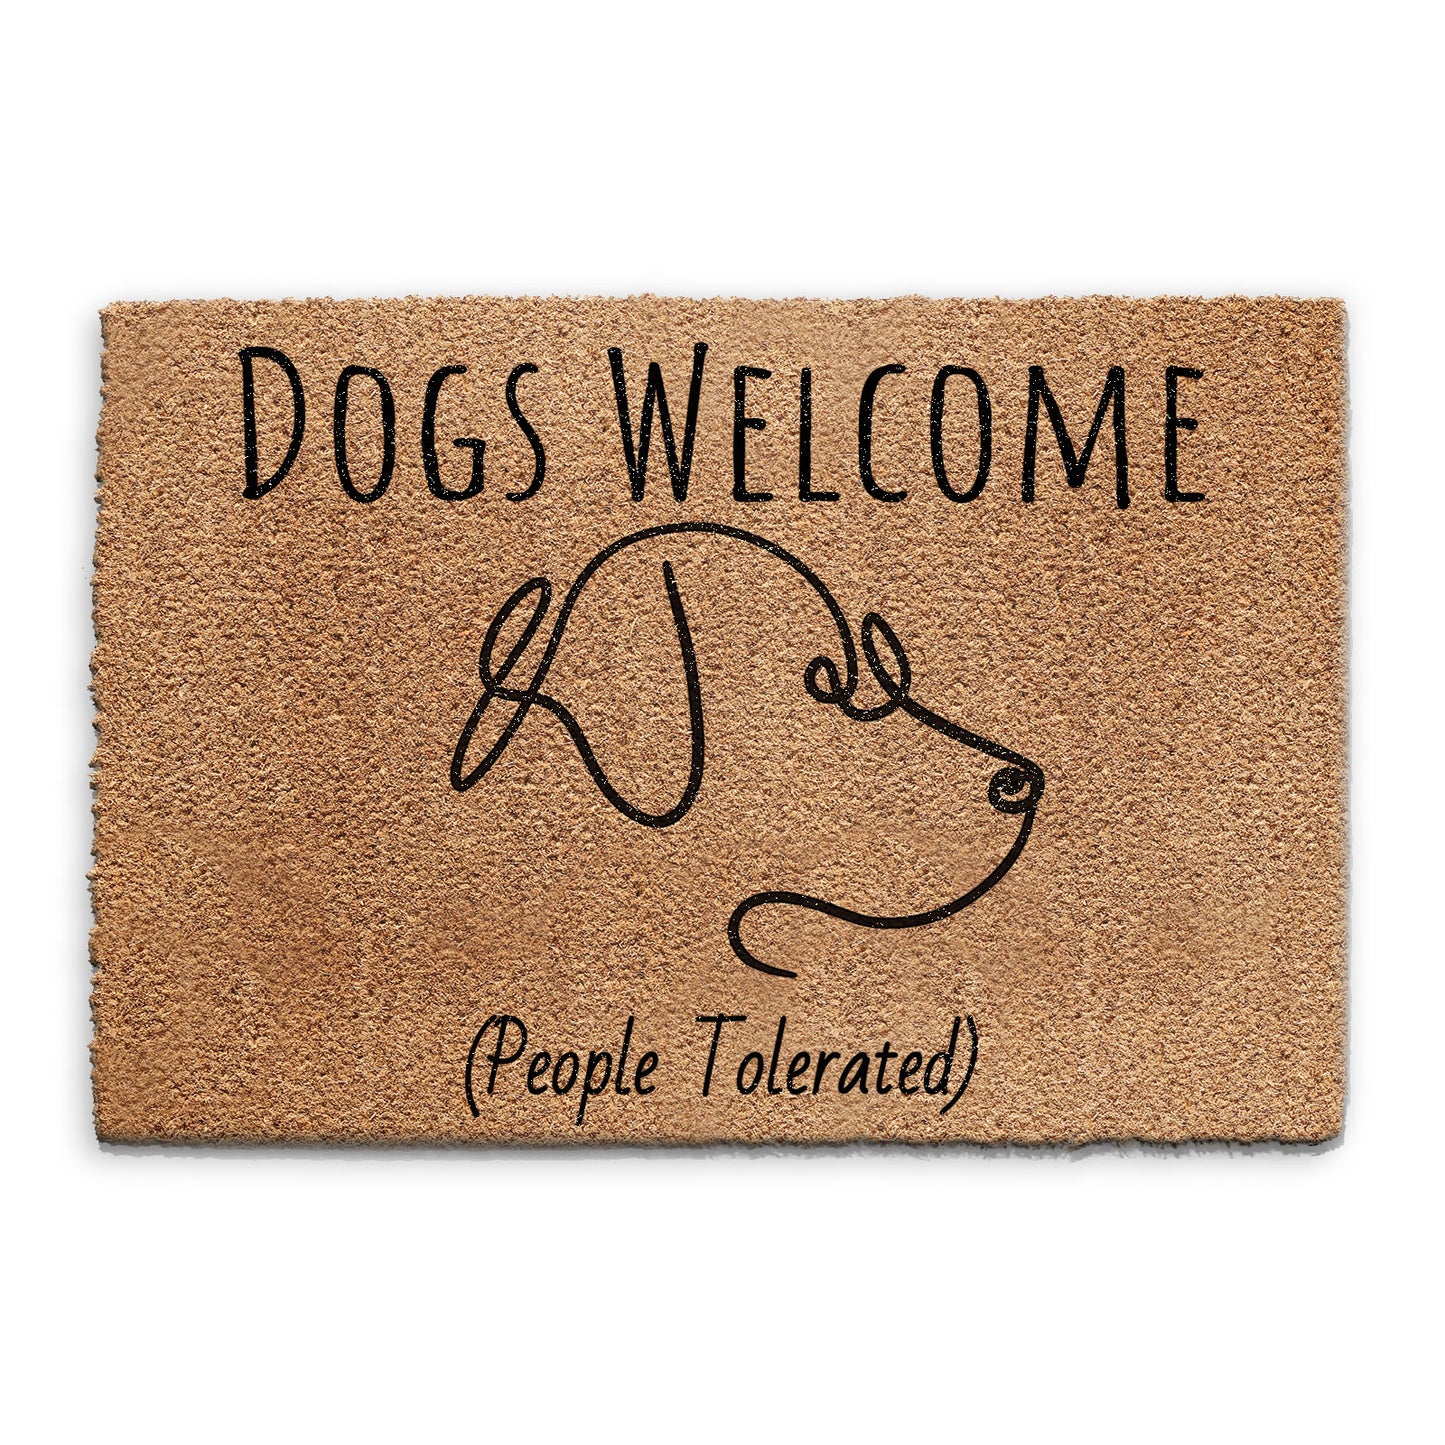 Coir Doormat - Dogs Welcome, People Tolerated